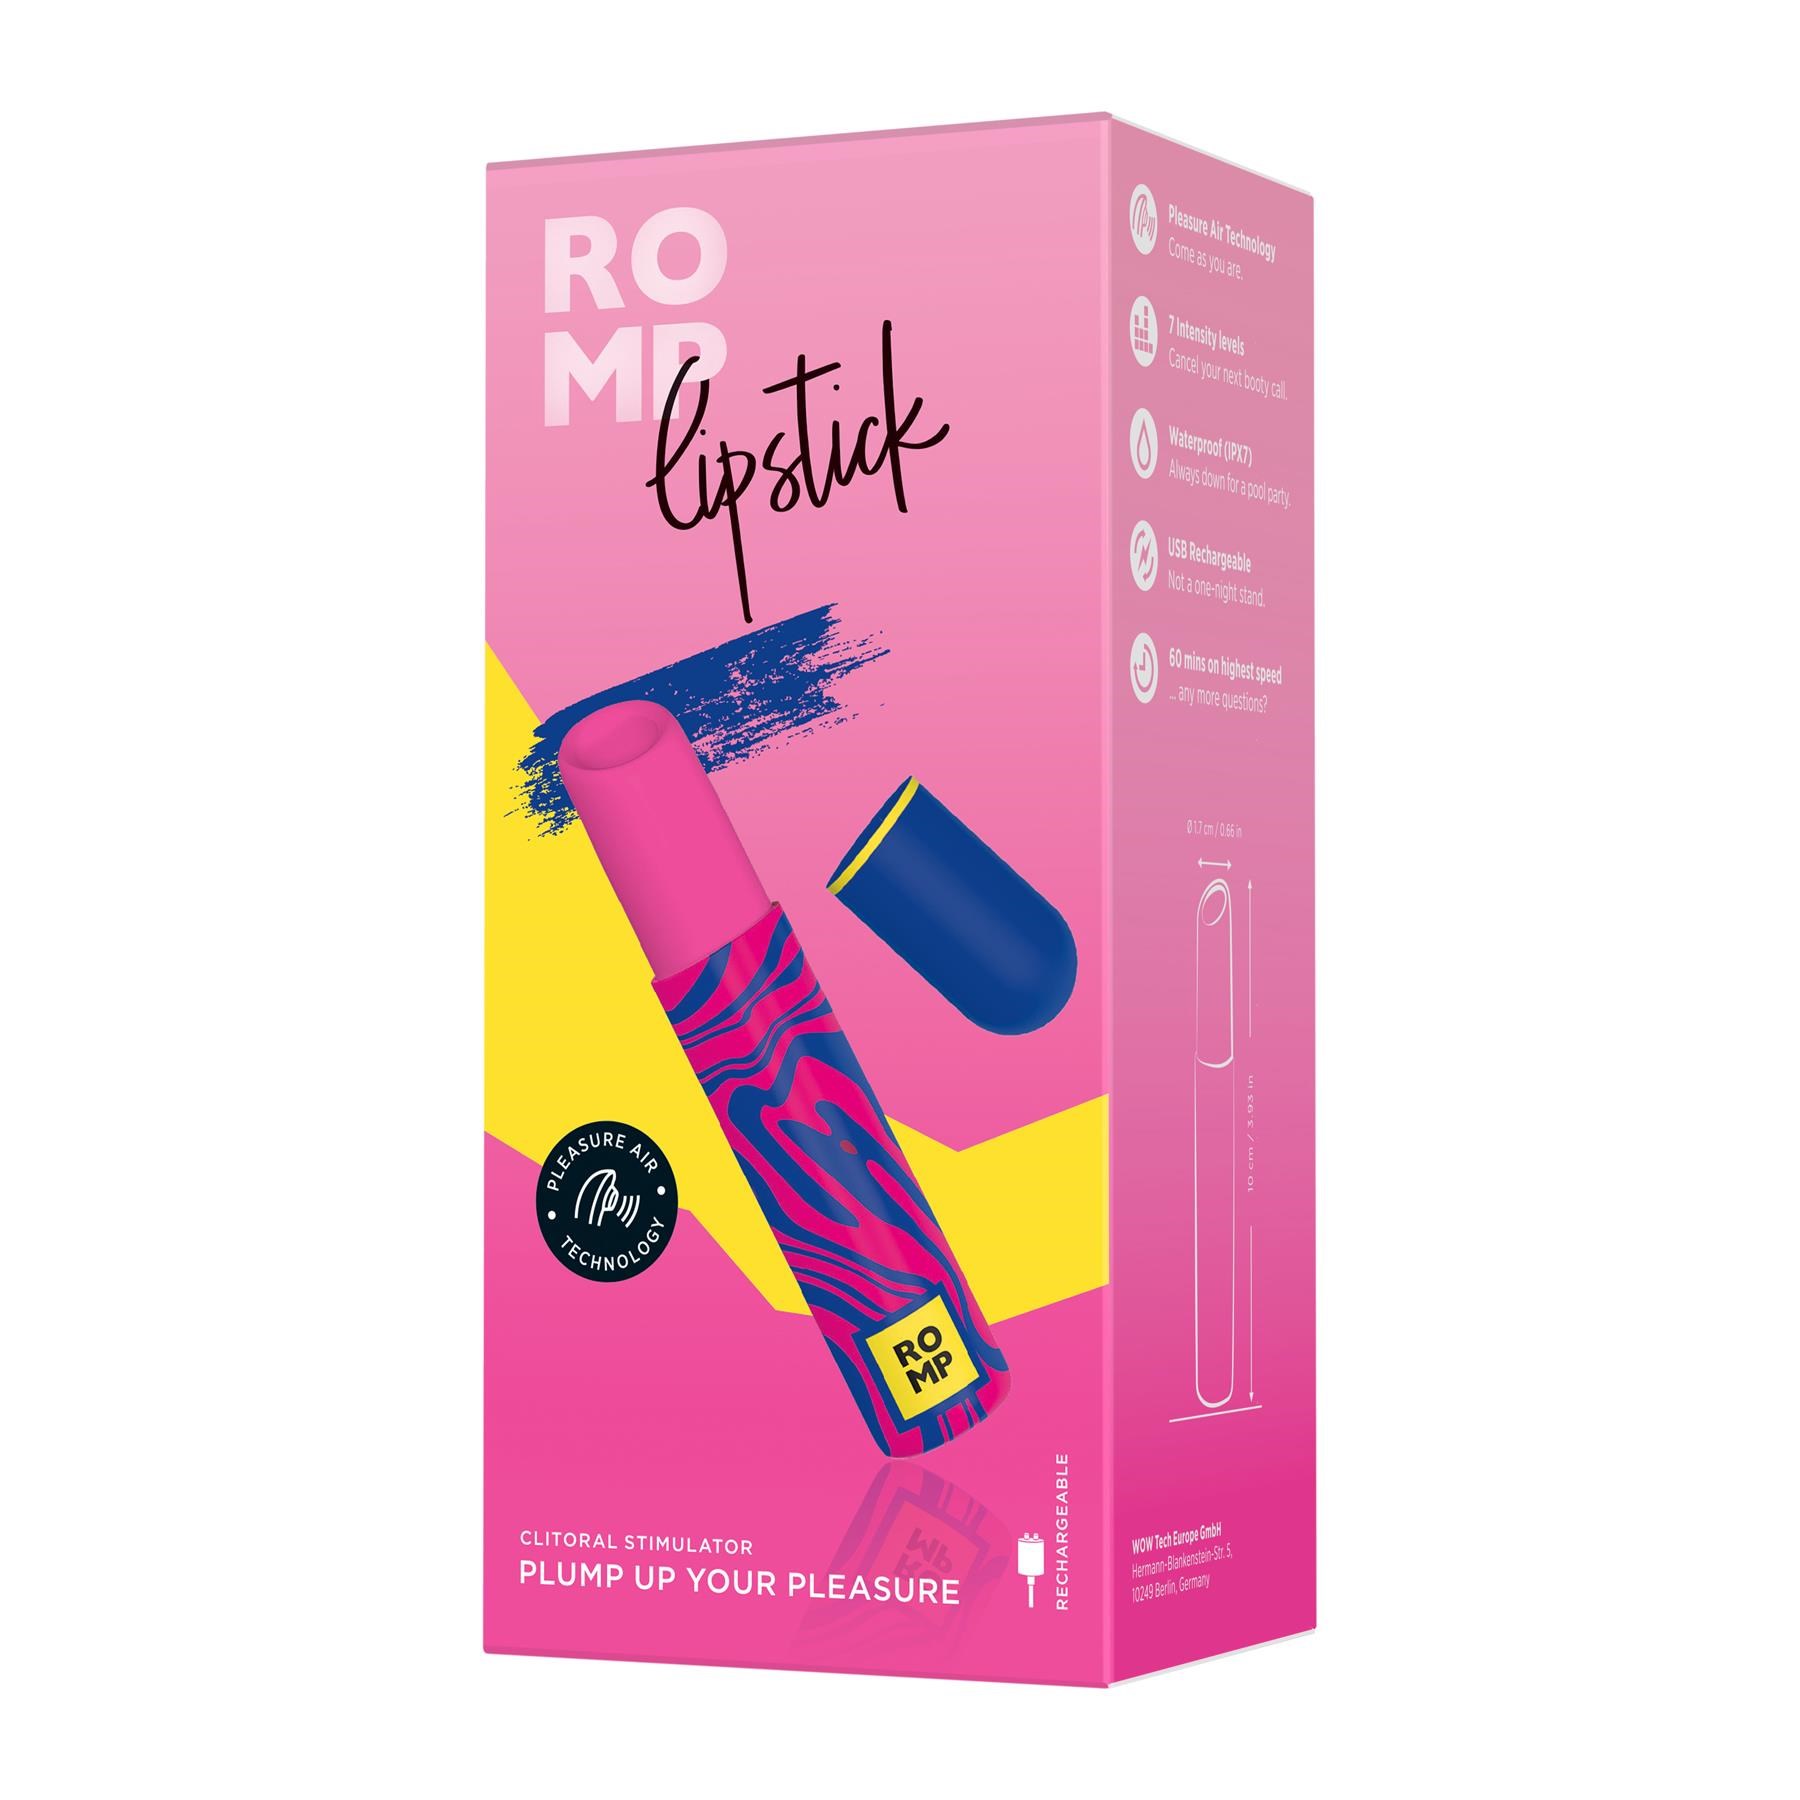 Romp Lipstick Vibrator- Packaging